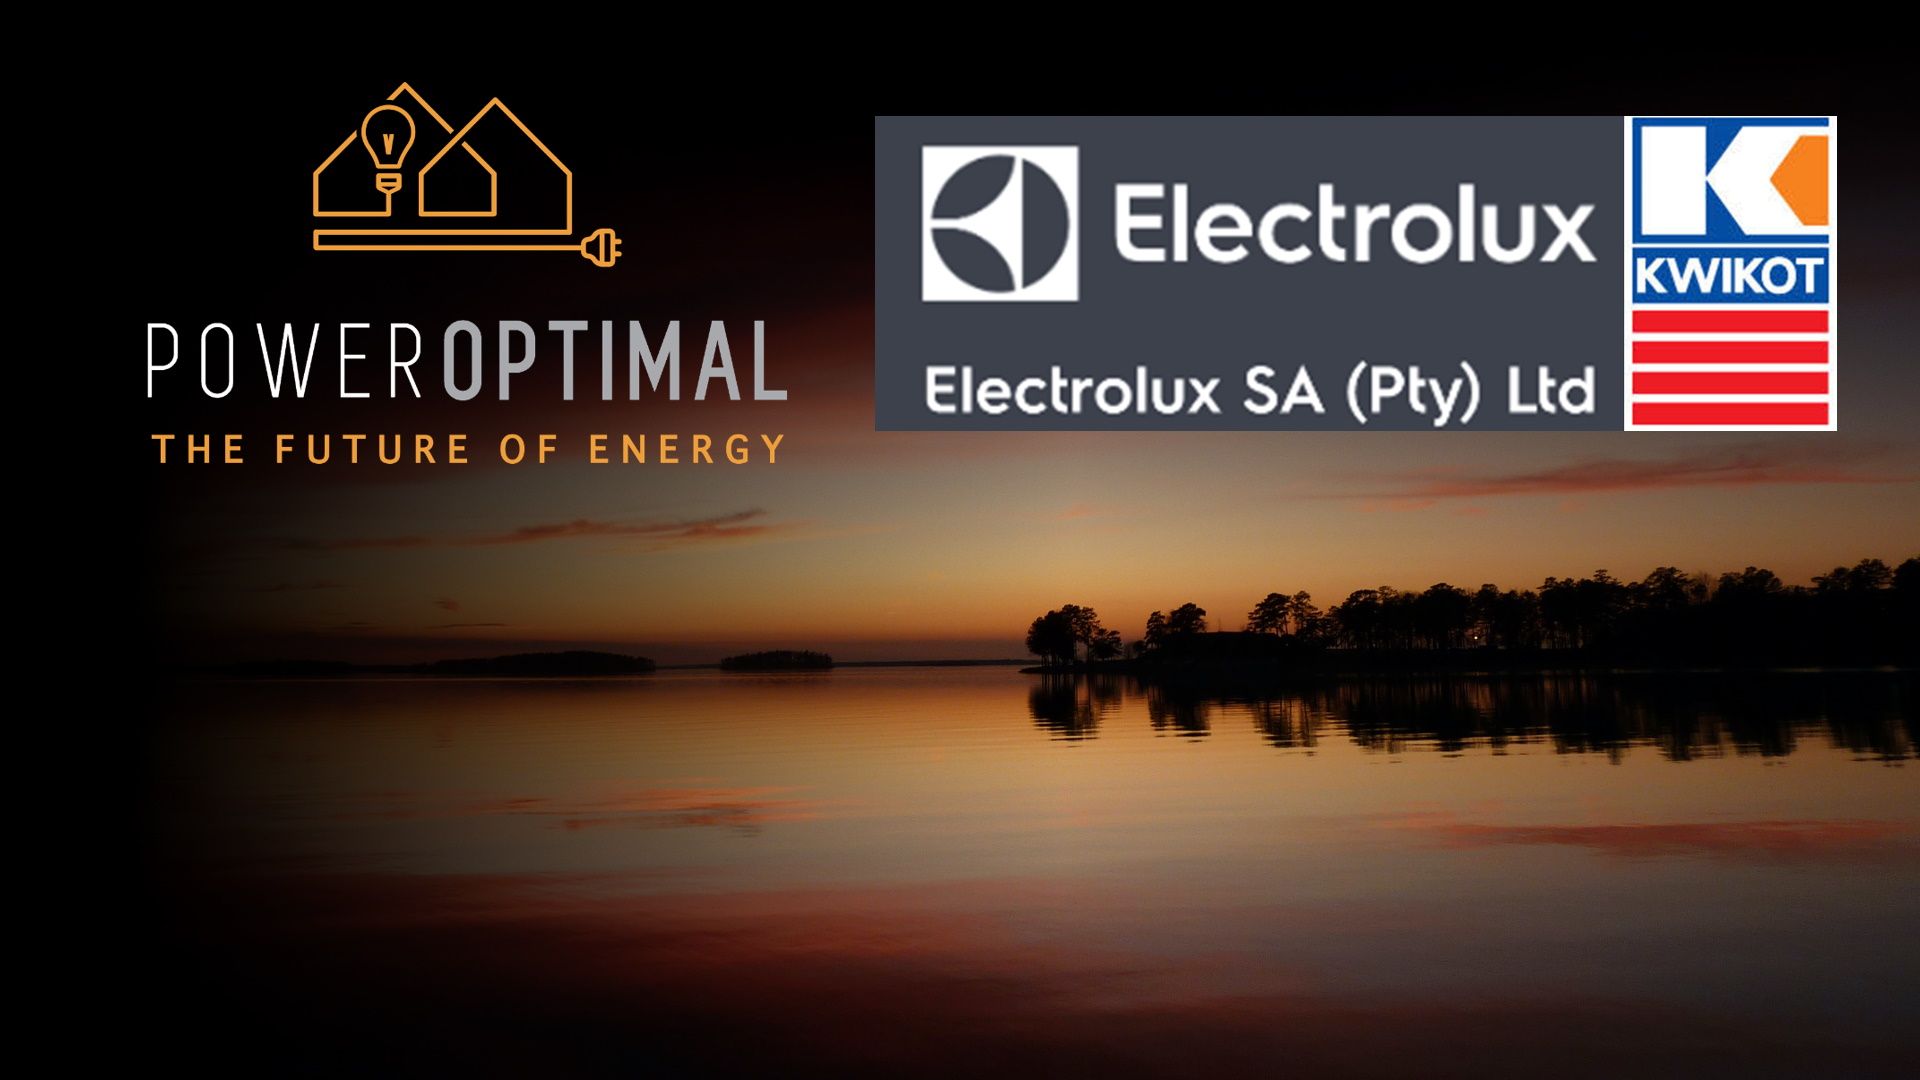 PowerOptimal & Electrolux Kwikot image for press release